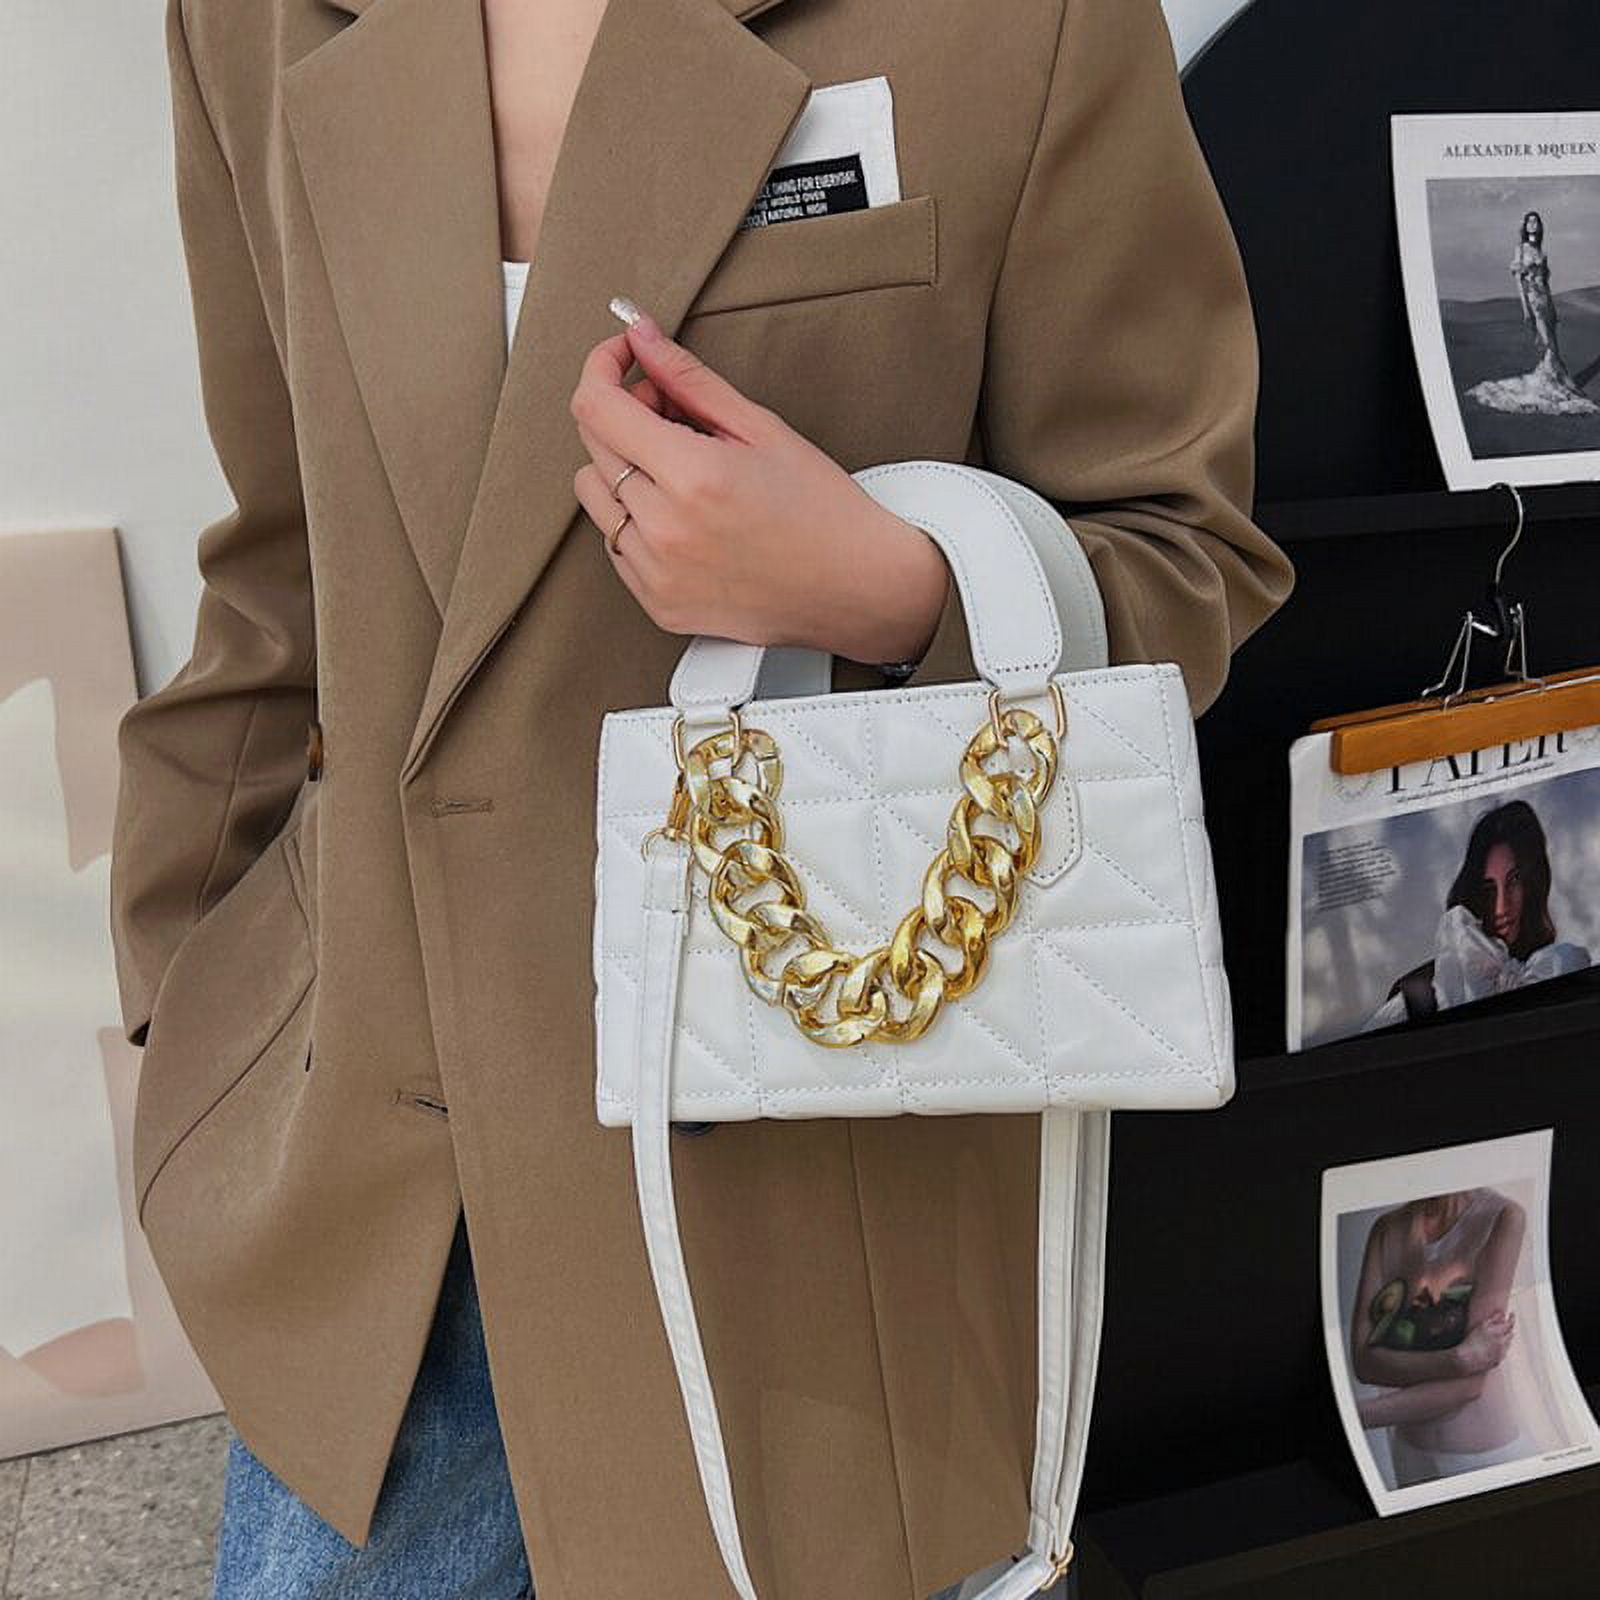 Cocopeaunt New Women Shoulder Bag Trendy Plaid PU Leather Crossbody Bags Fashion Ladies Handbags Brand Designer Top Handle Bag, Adult Unisex, Size